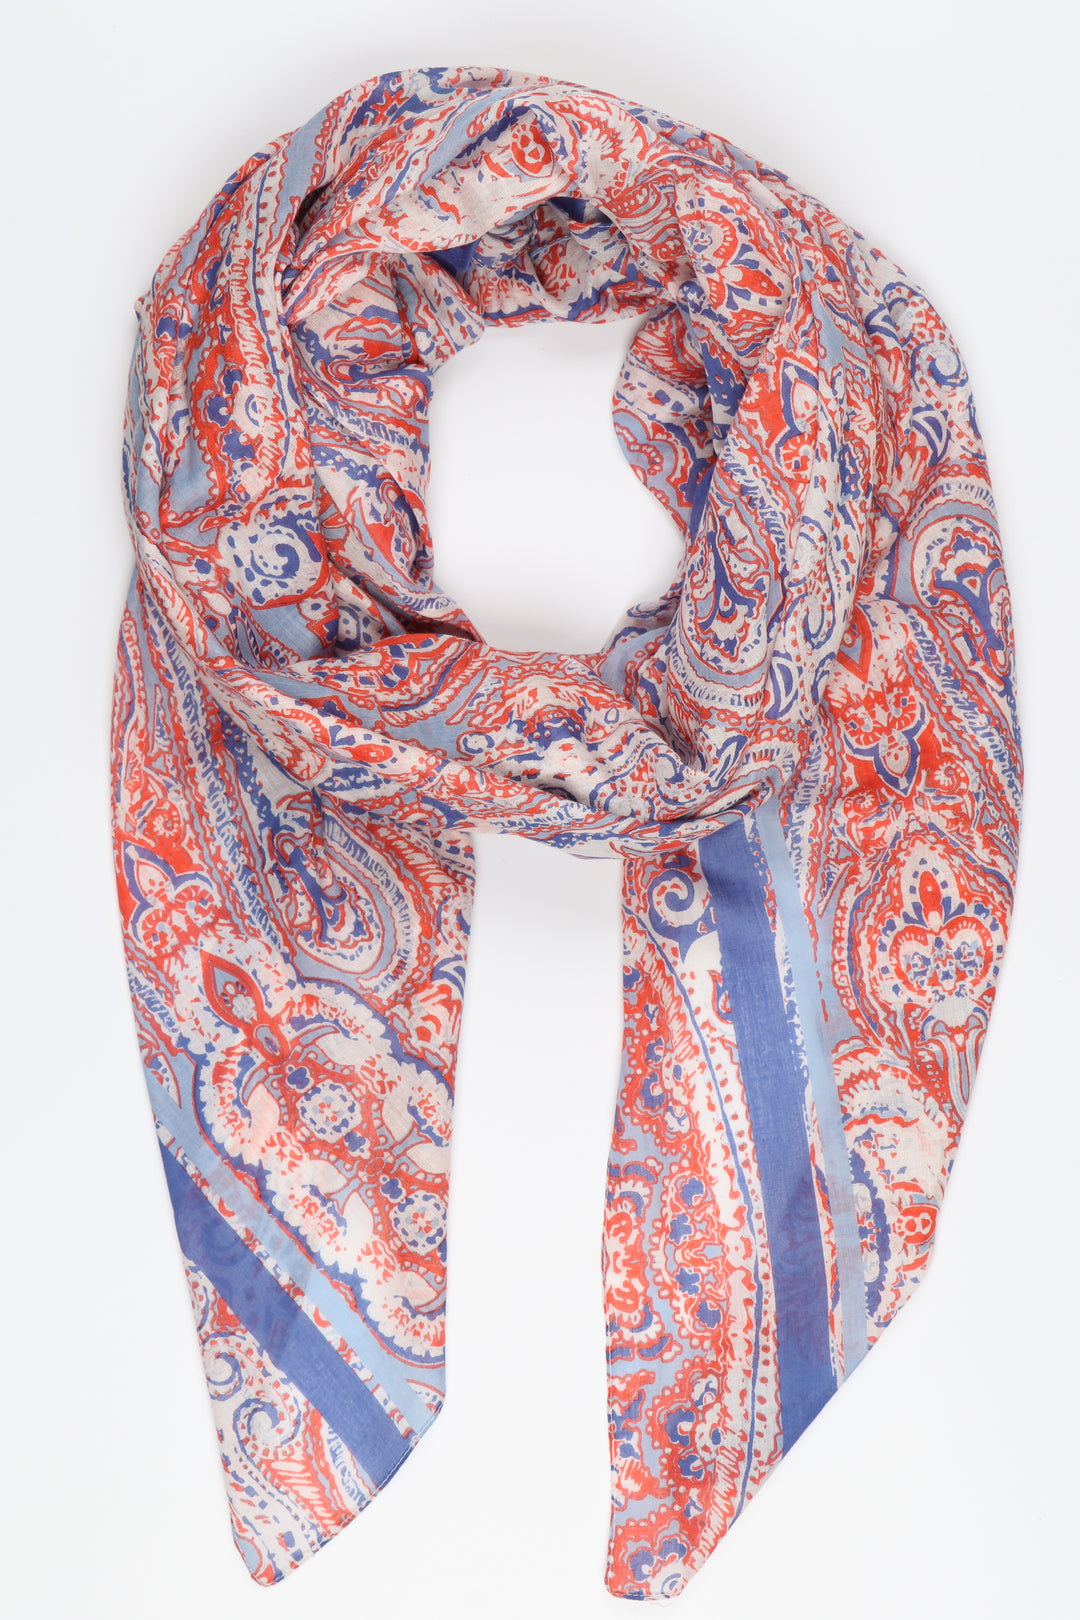 orange and blue paisley print cotton scarf with a blue border stripe trim